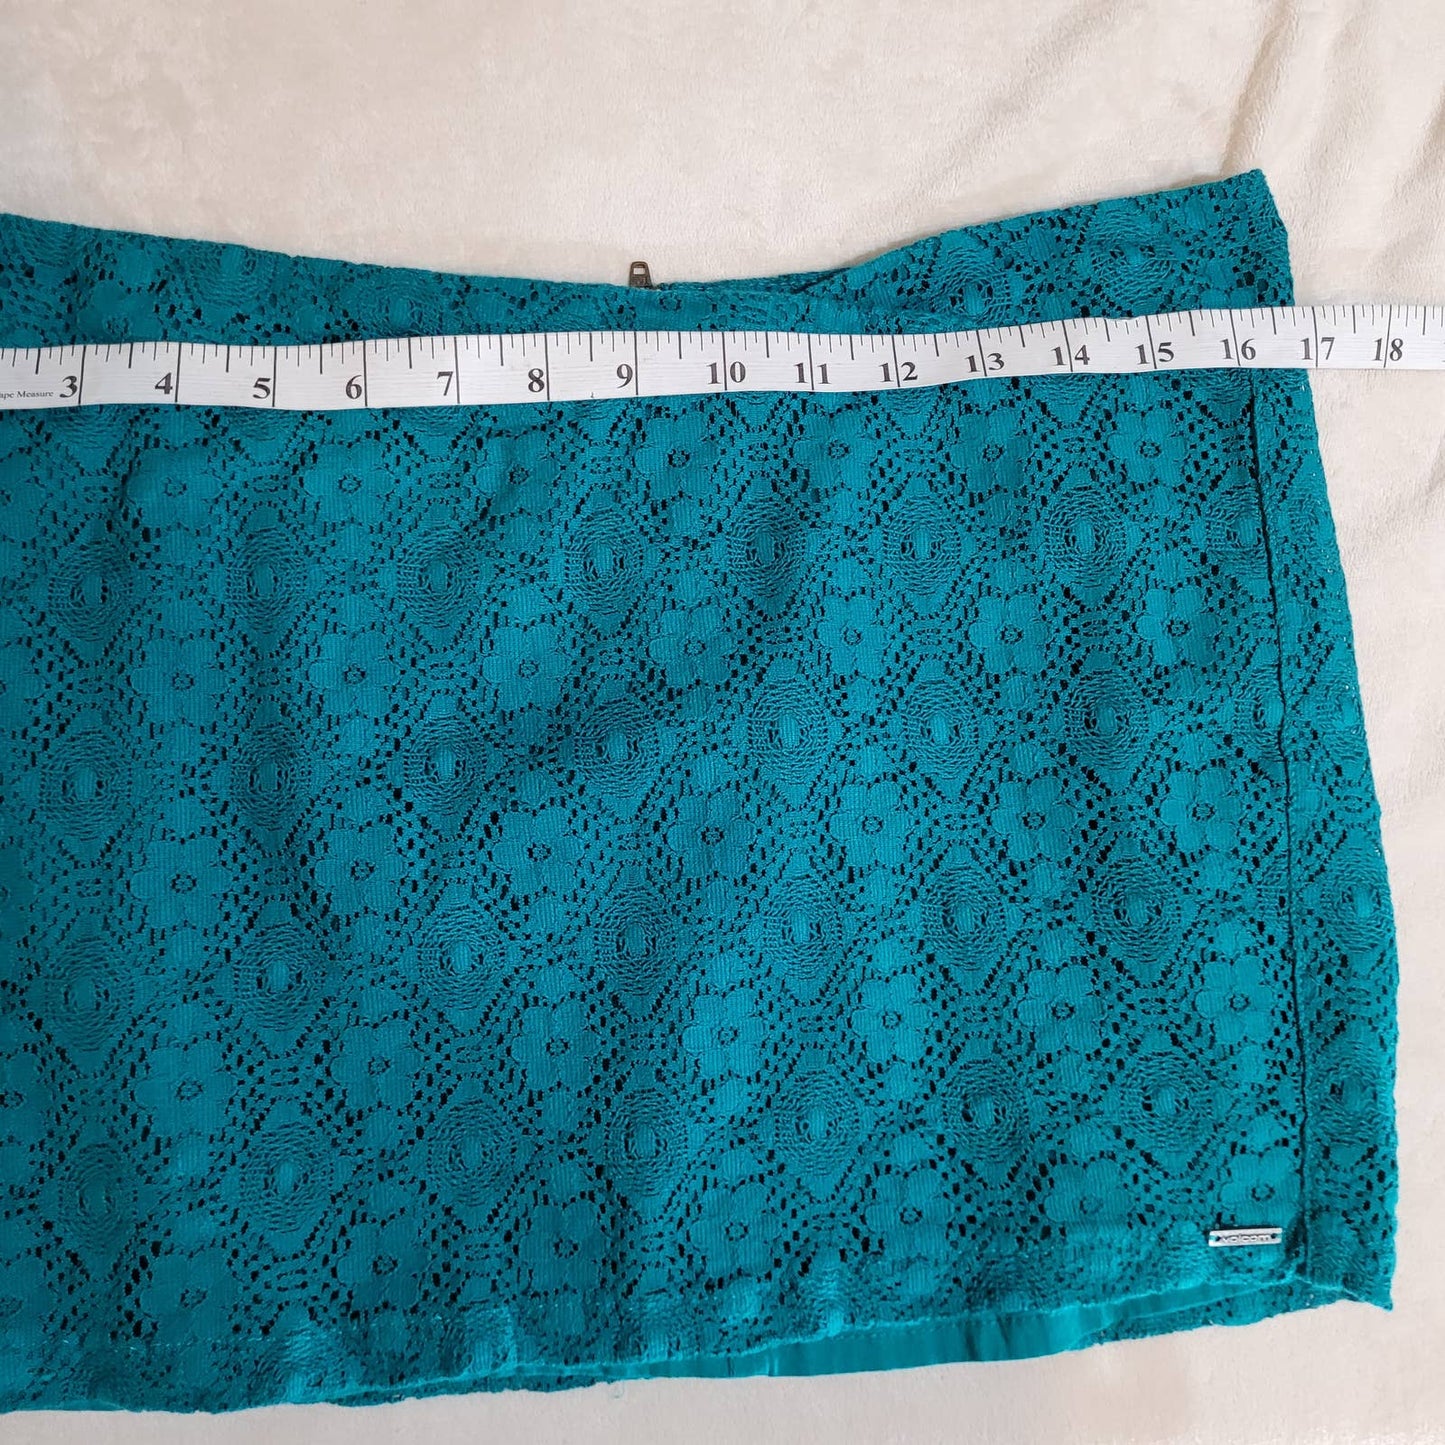 Volcom Green Turquoise Lace Mini Skirt - Size 9Markita's ClosetVolcom